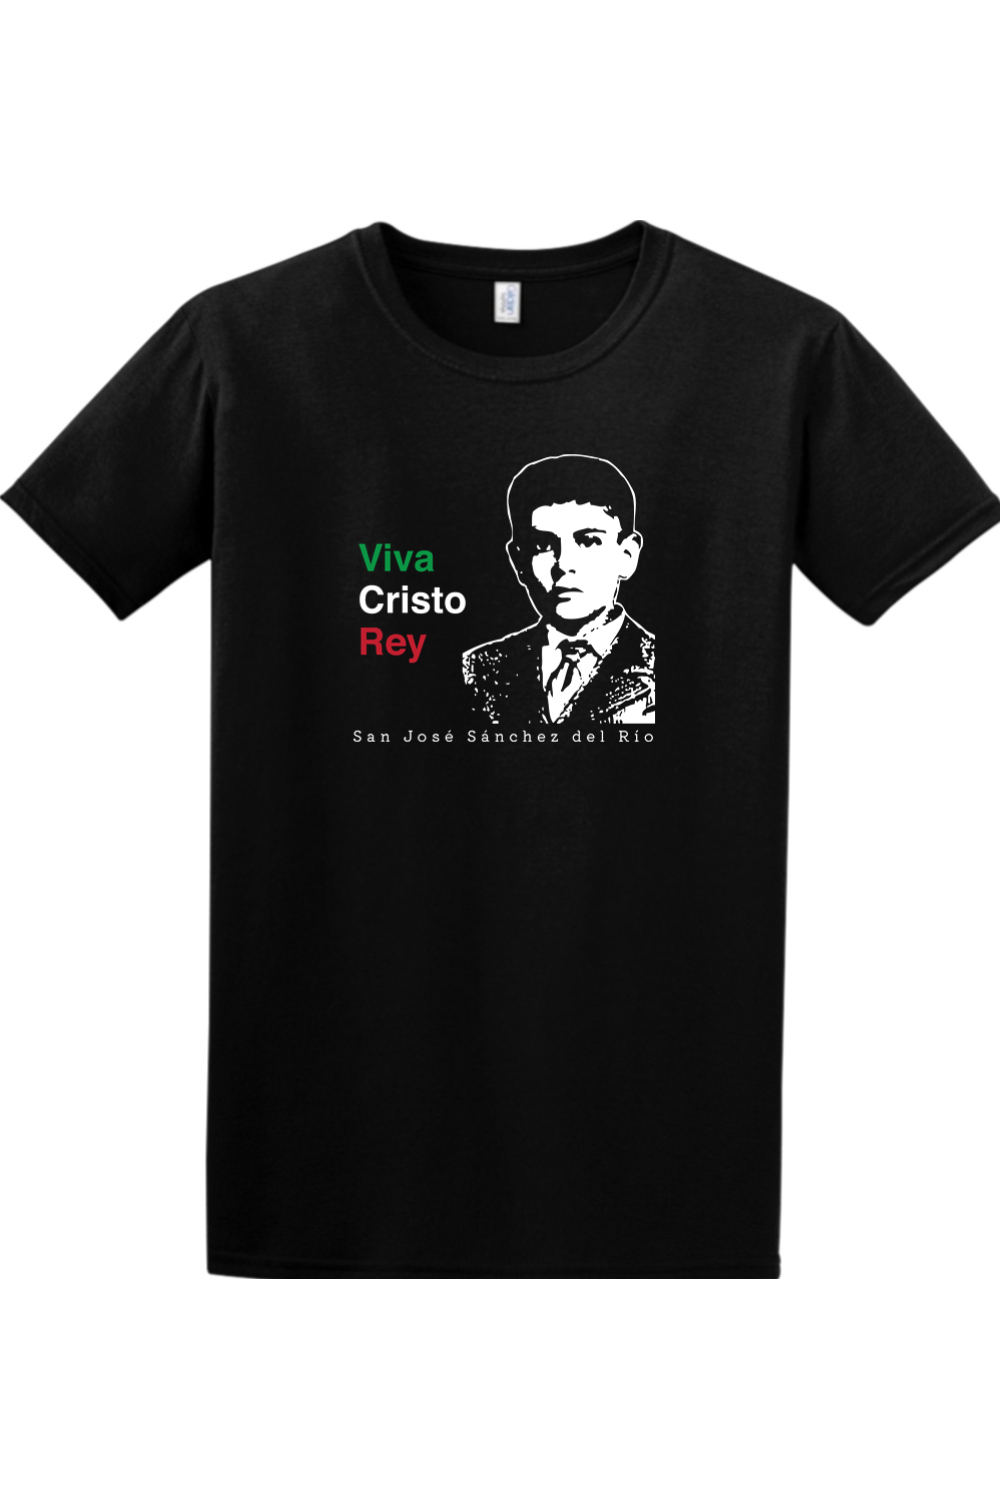 Viva Cristo Rey - St. Jose Sanchez del Rio Adult T-Shirt